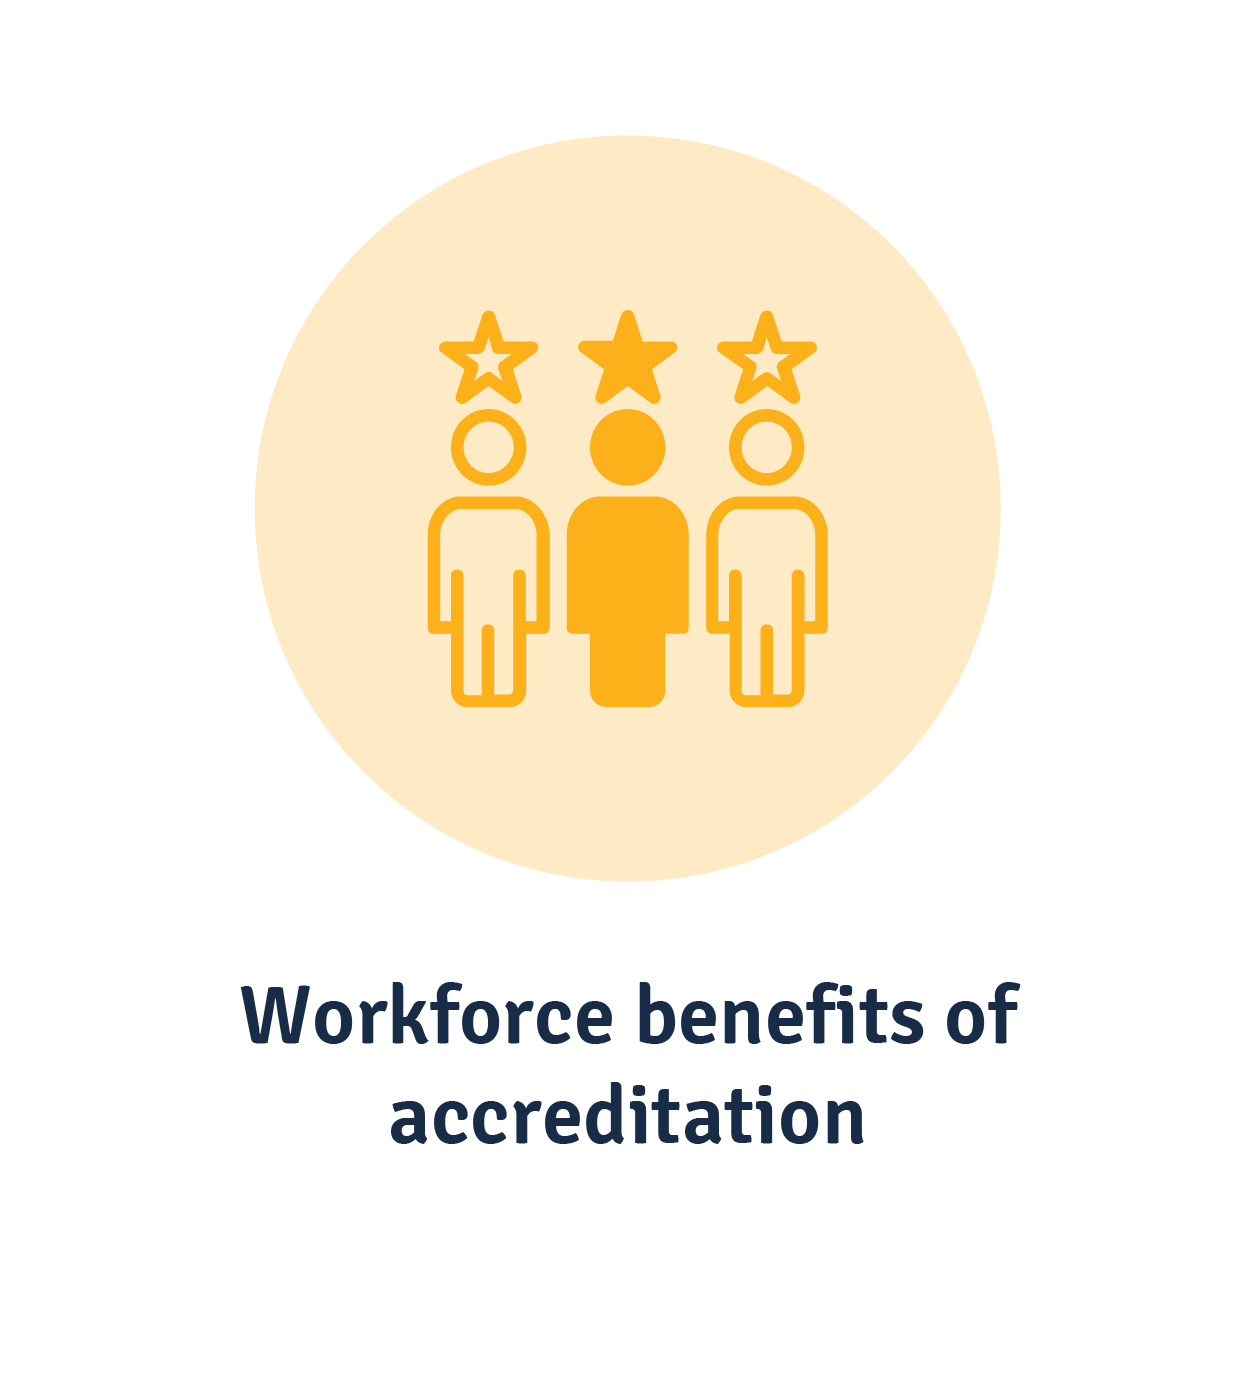 Workforce benefits of accreditation